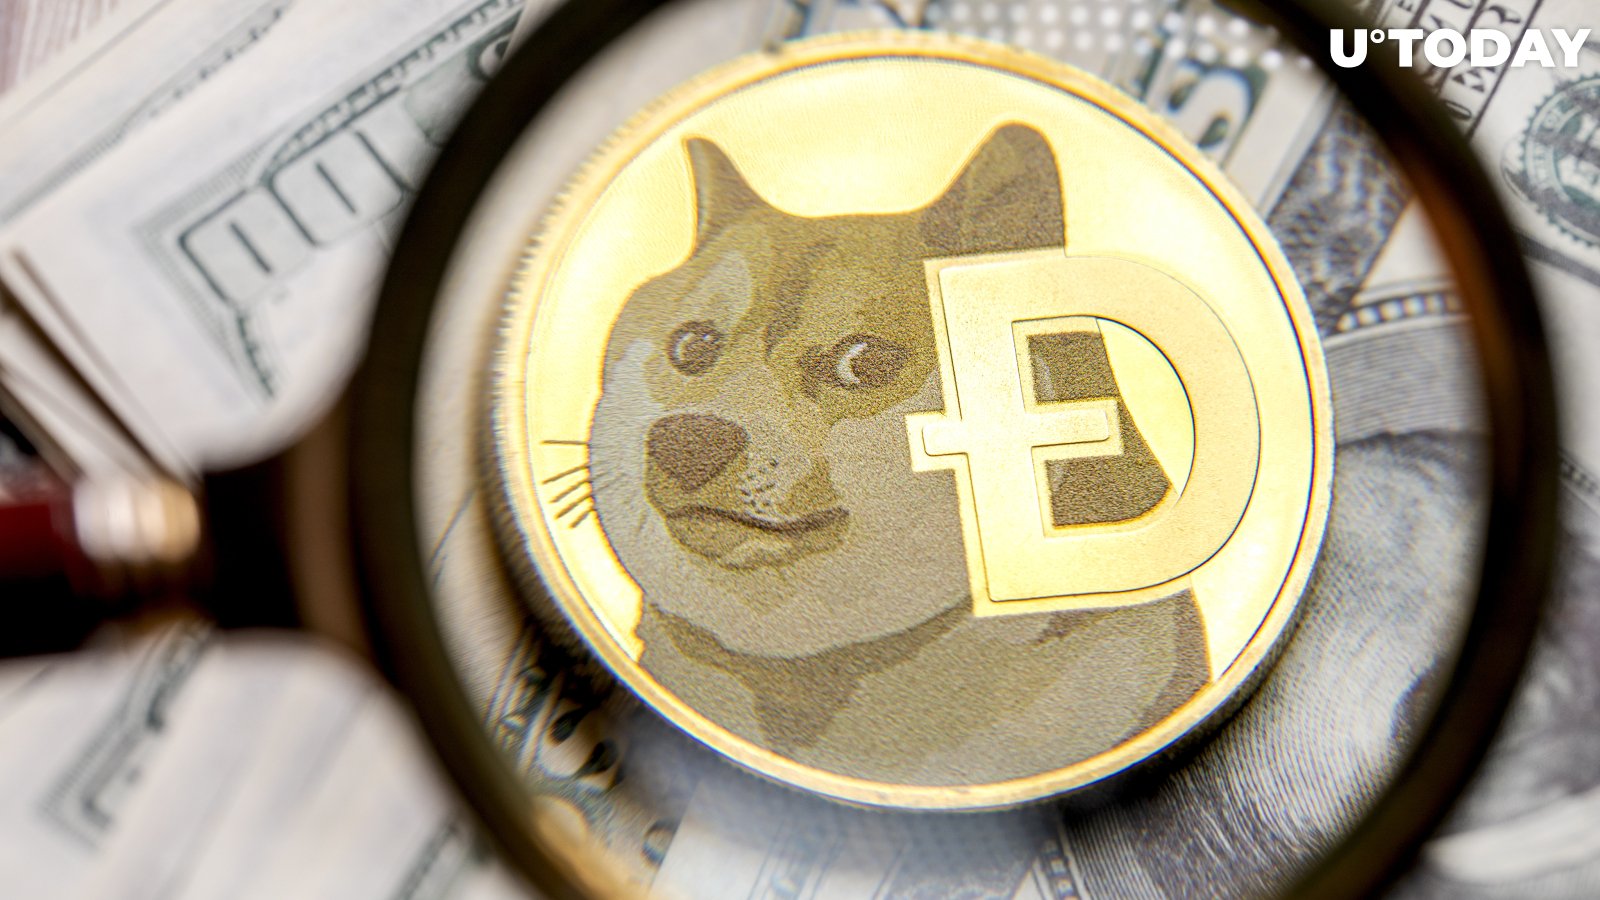 Dogecoin Is Not Worth $37 Billion, Says Crypto King Barry Silbert